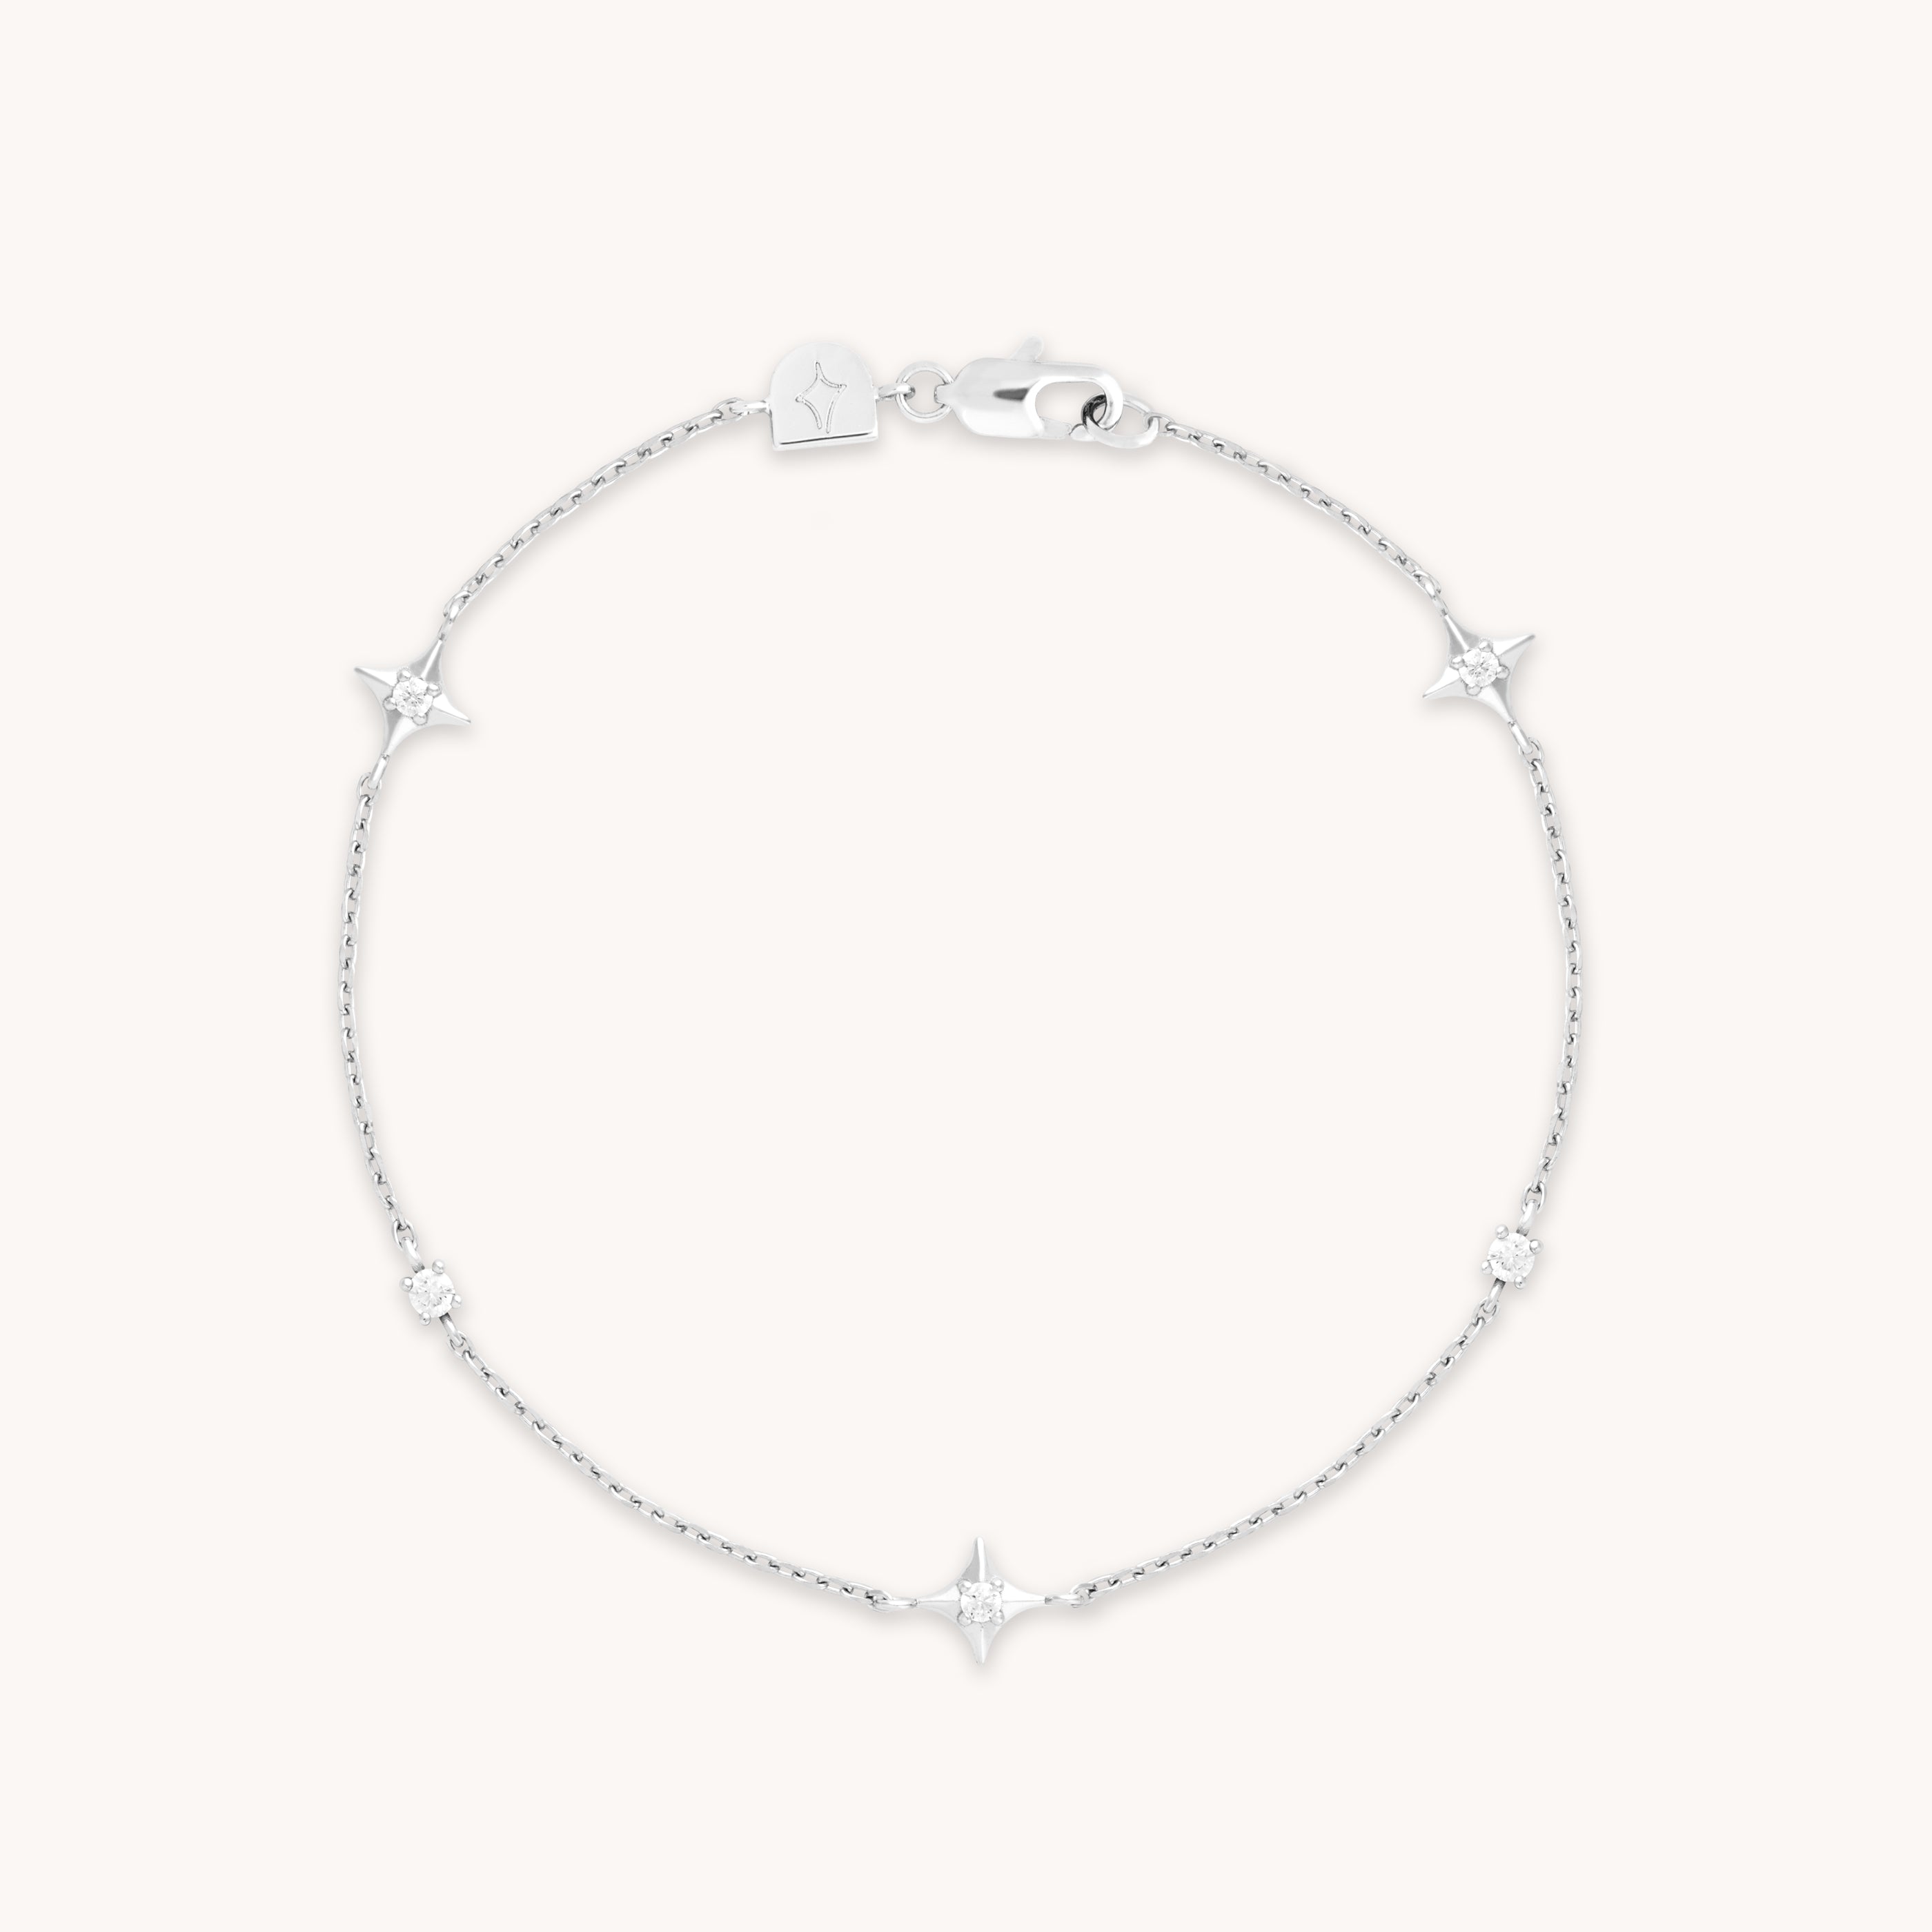 Cosmic Star Silver Charm Bracelet | Astrid & Miyu Bracelets